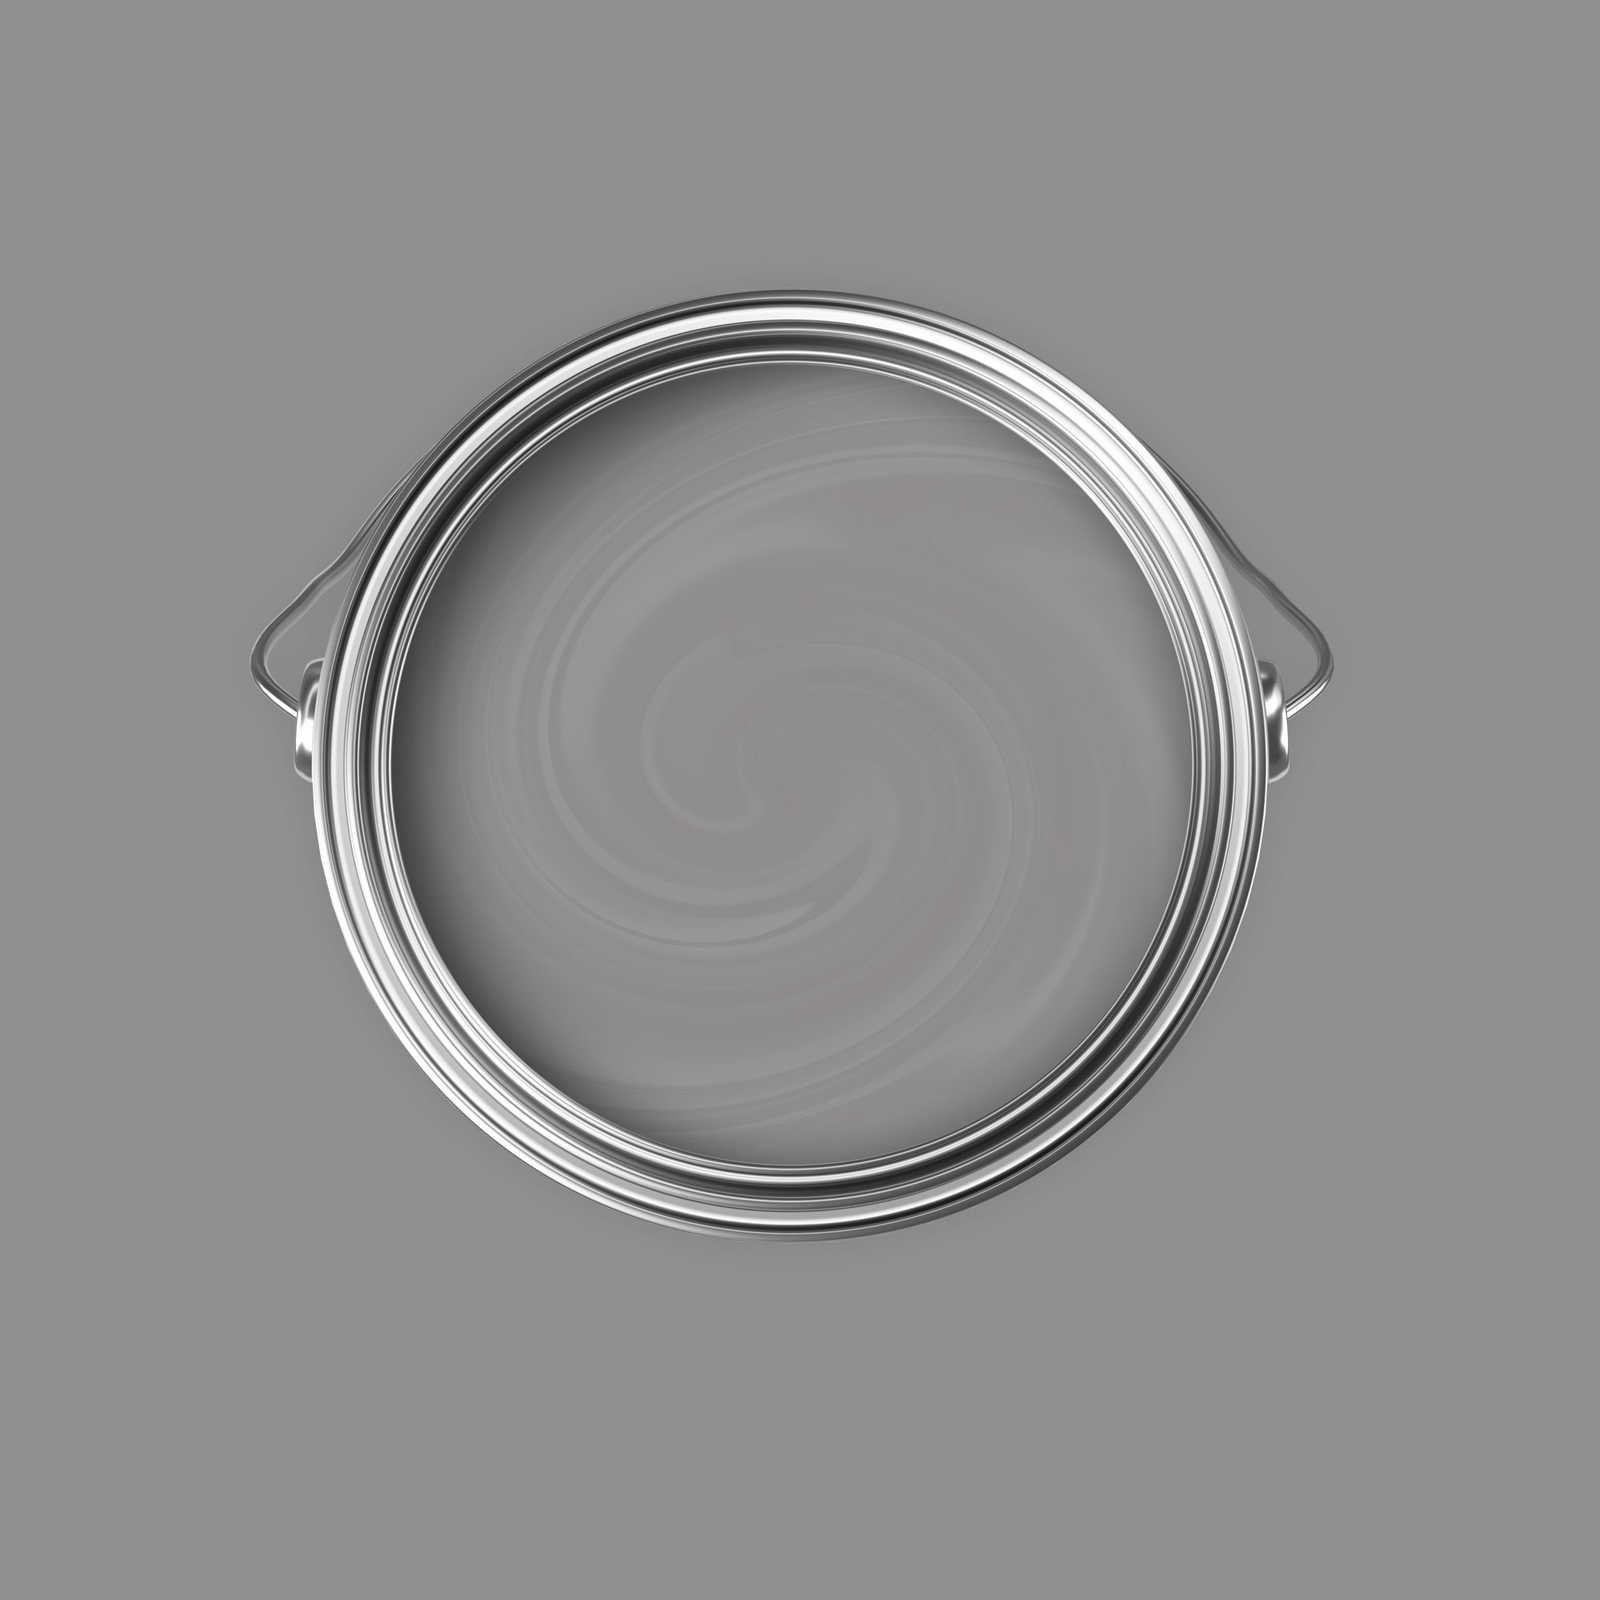             Premium Wandfarbe überzeugendes Steingrau »Industrial Grey« NW103 – 5 Liter
        